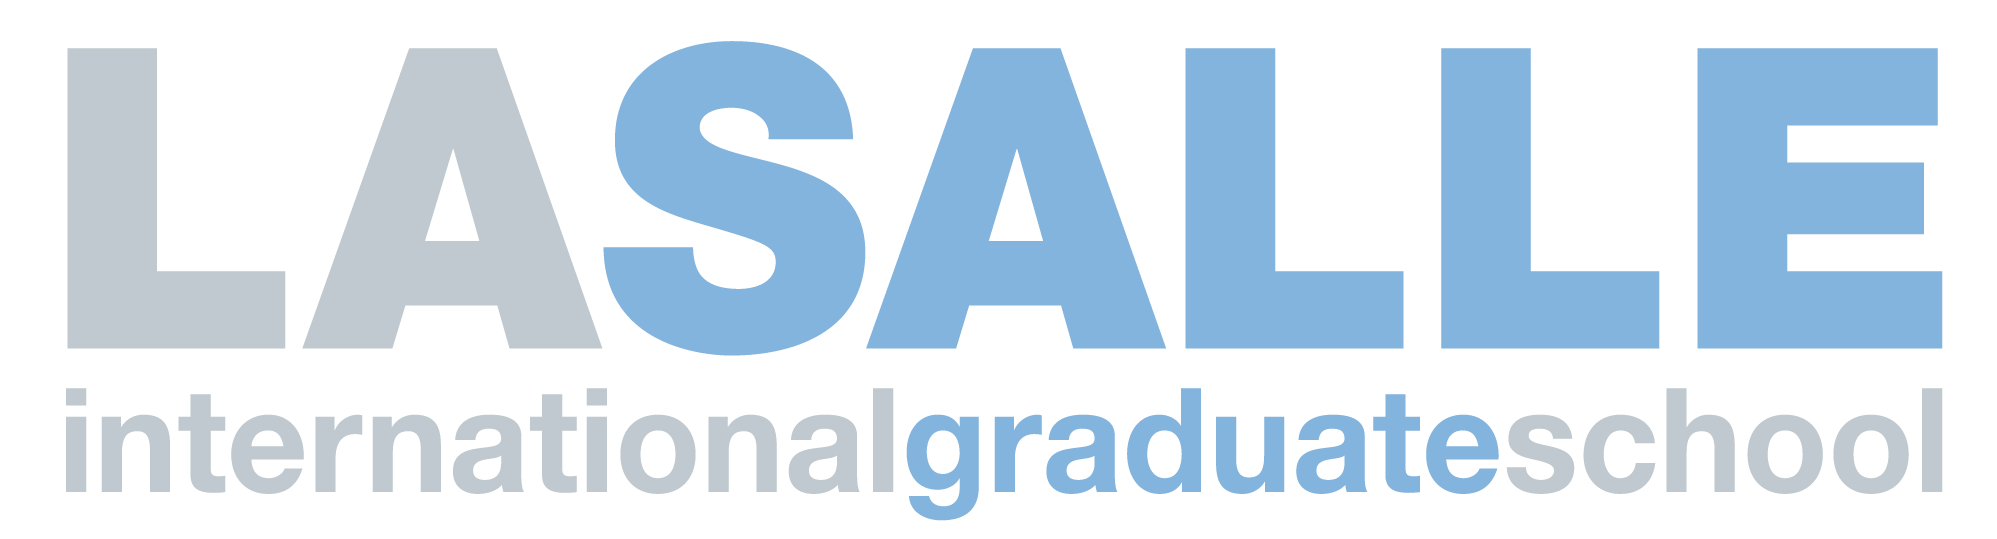 Logotipo La Salle International Graduate School